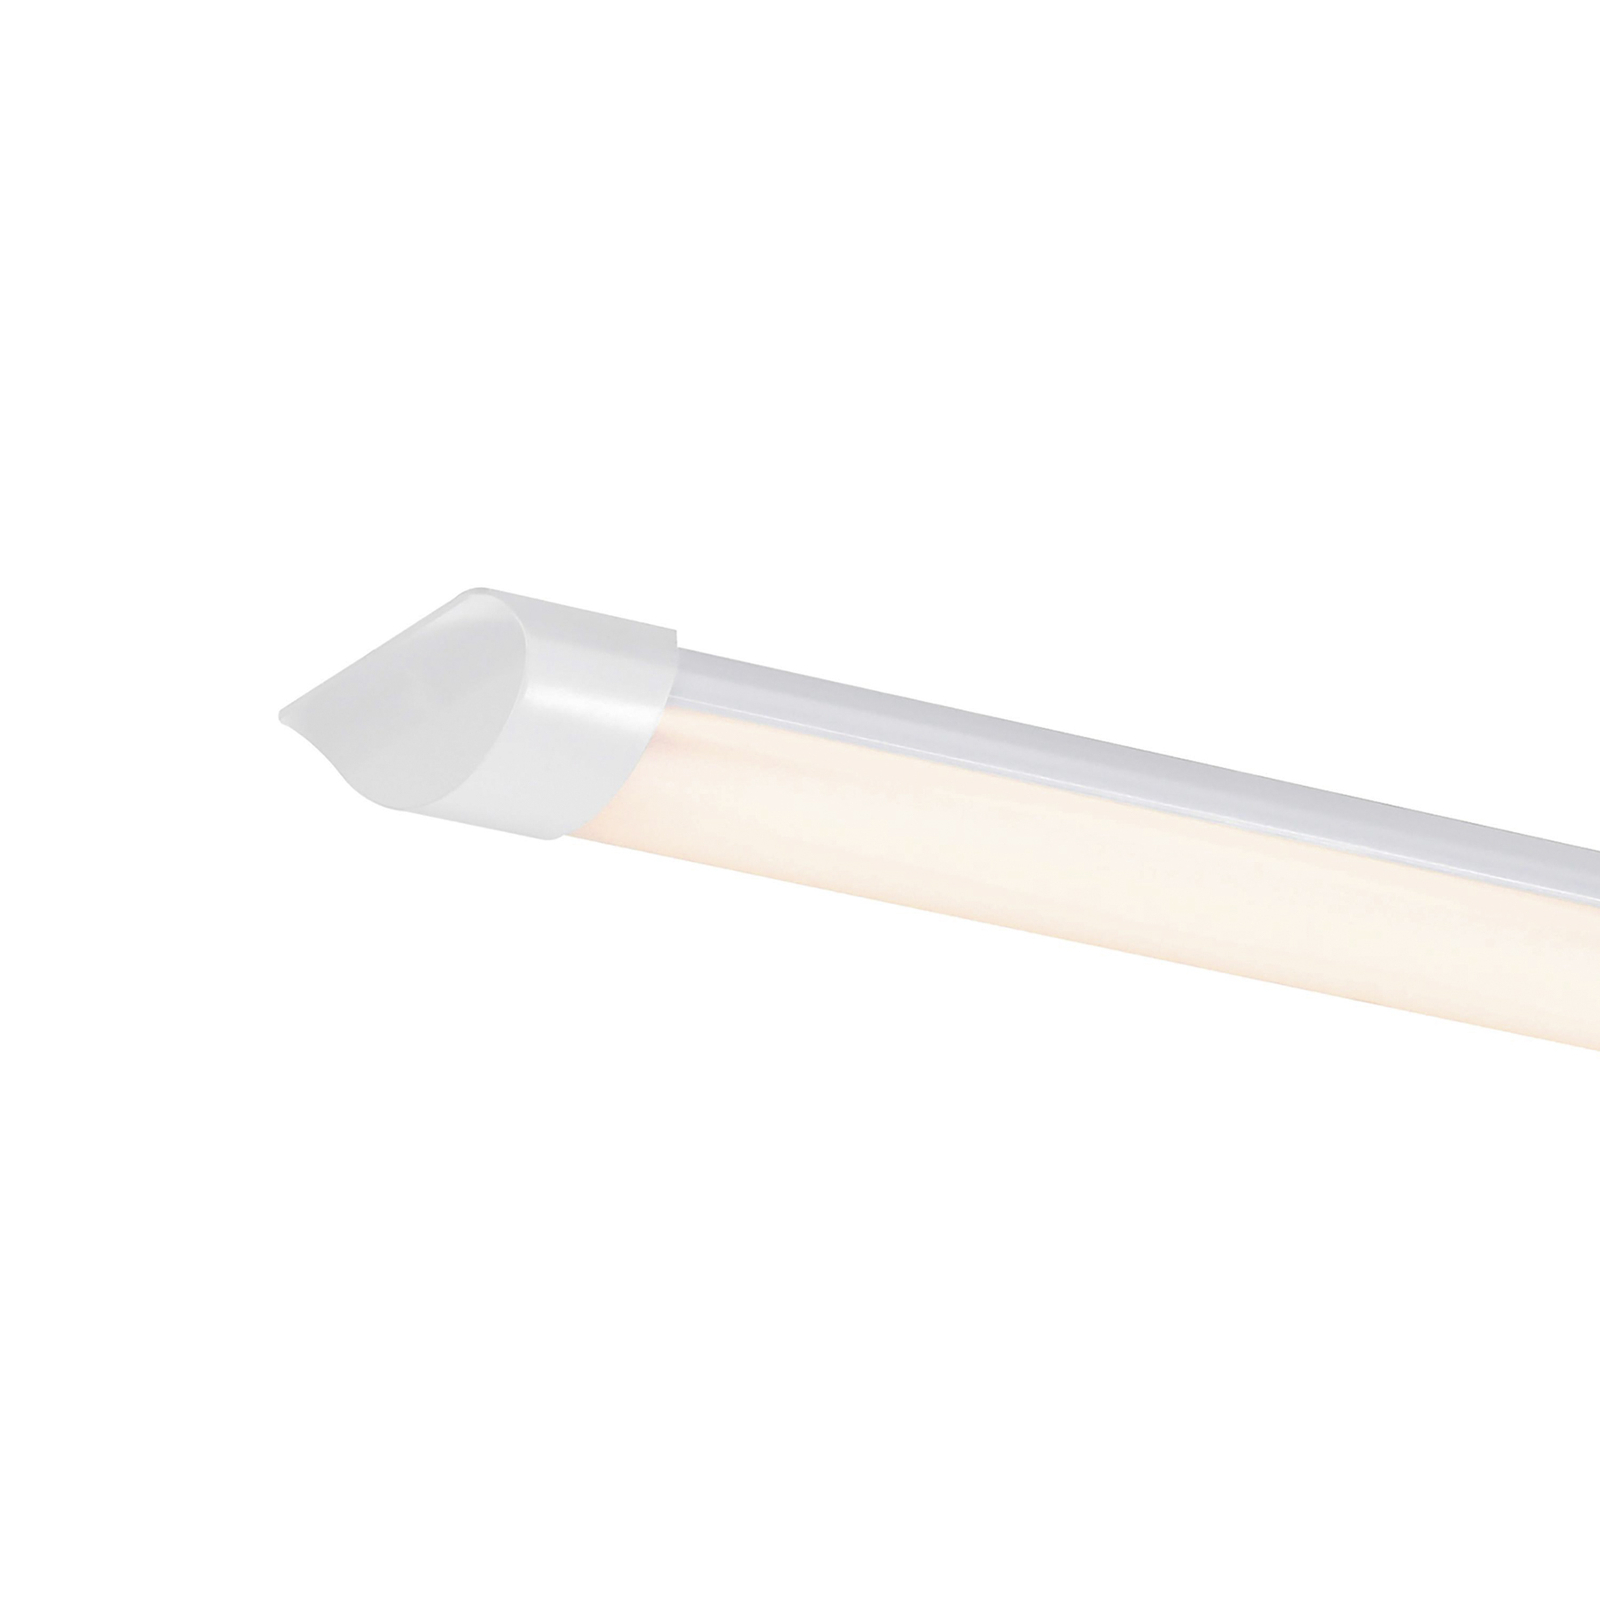 Fita luminosa LED Glendale, 59 cm, IP20, plástico, branco